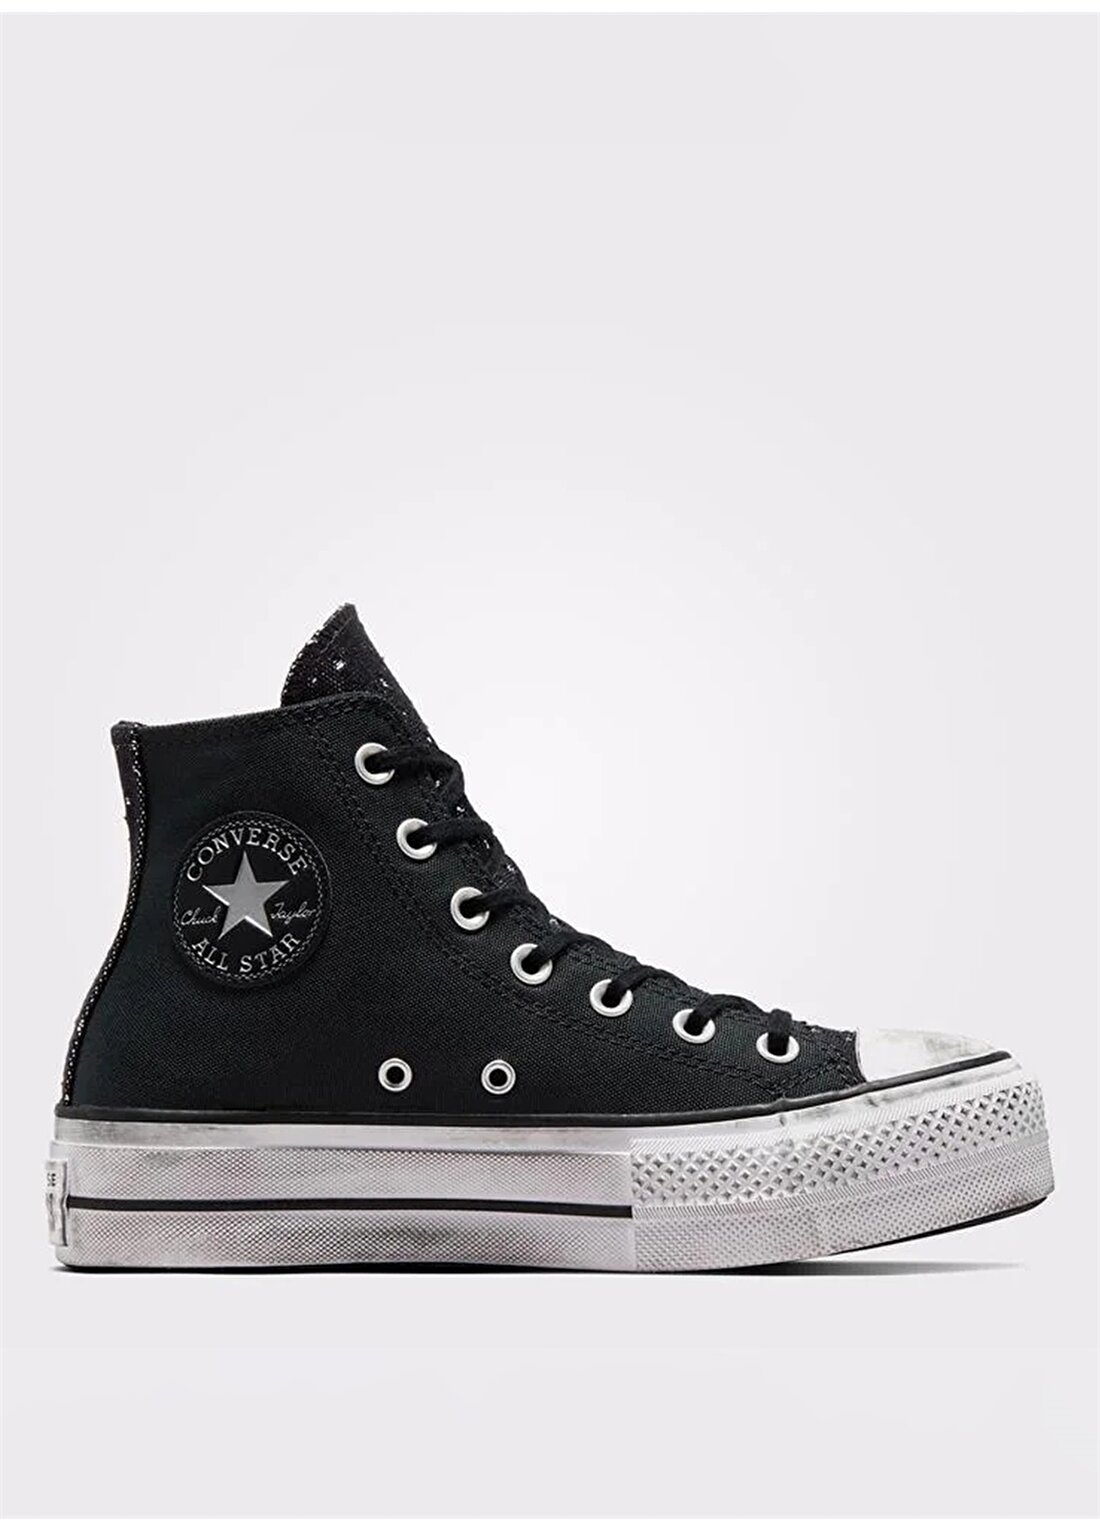 Converse Siyah Kadın Kanvas Lifestyle Ayakkabı A06450C CHUCK TAYLOR ALL STAR LI